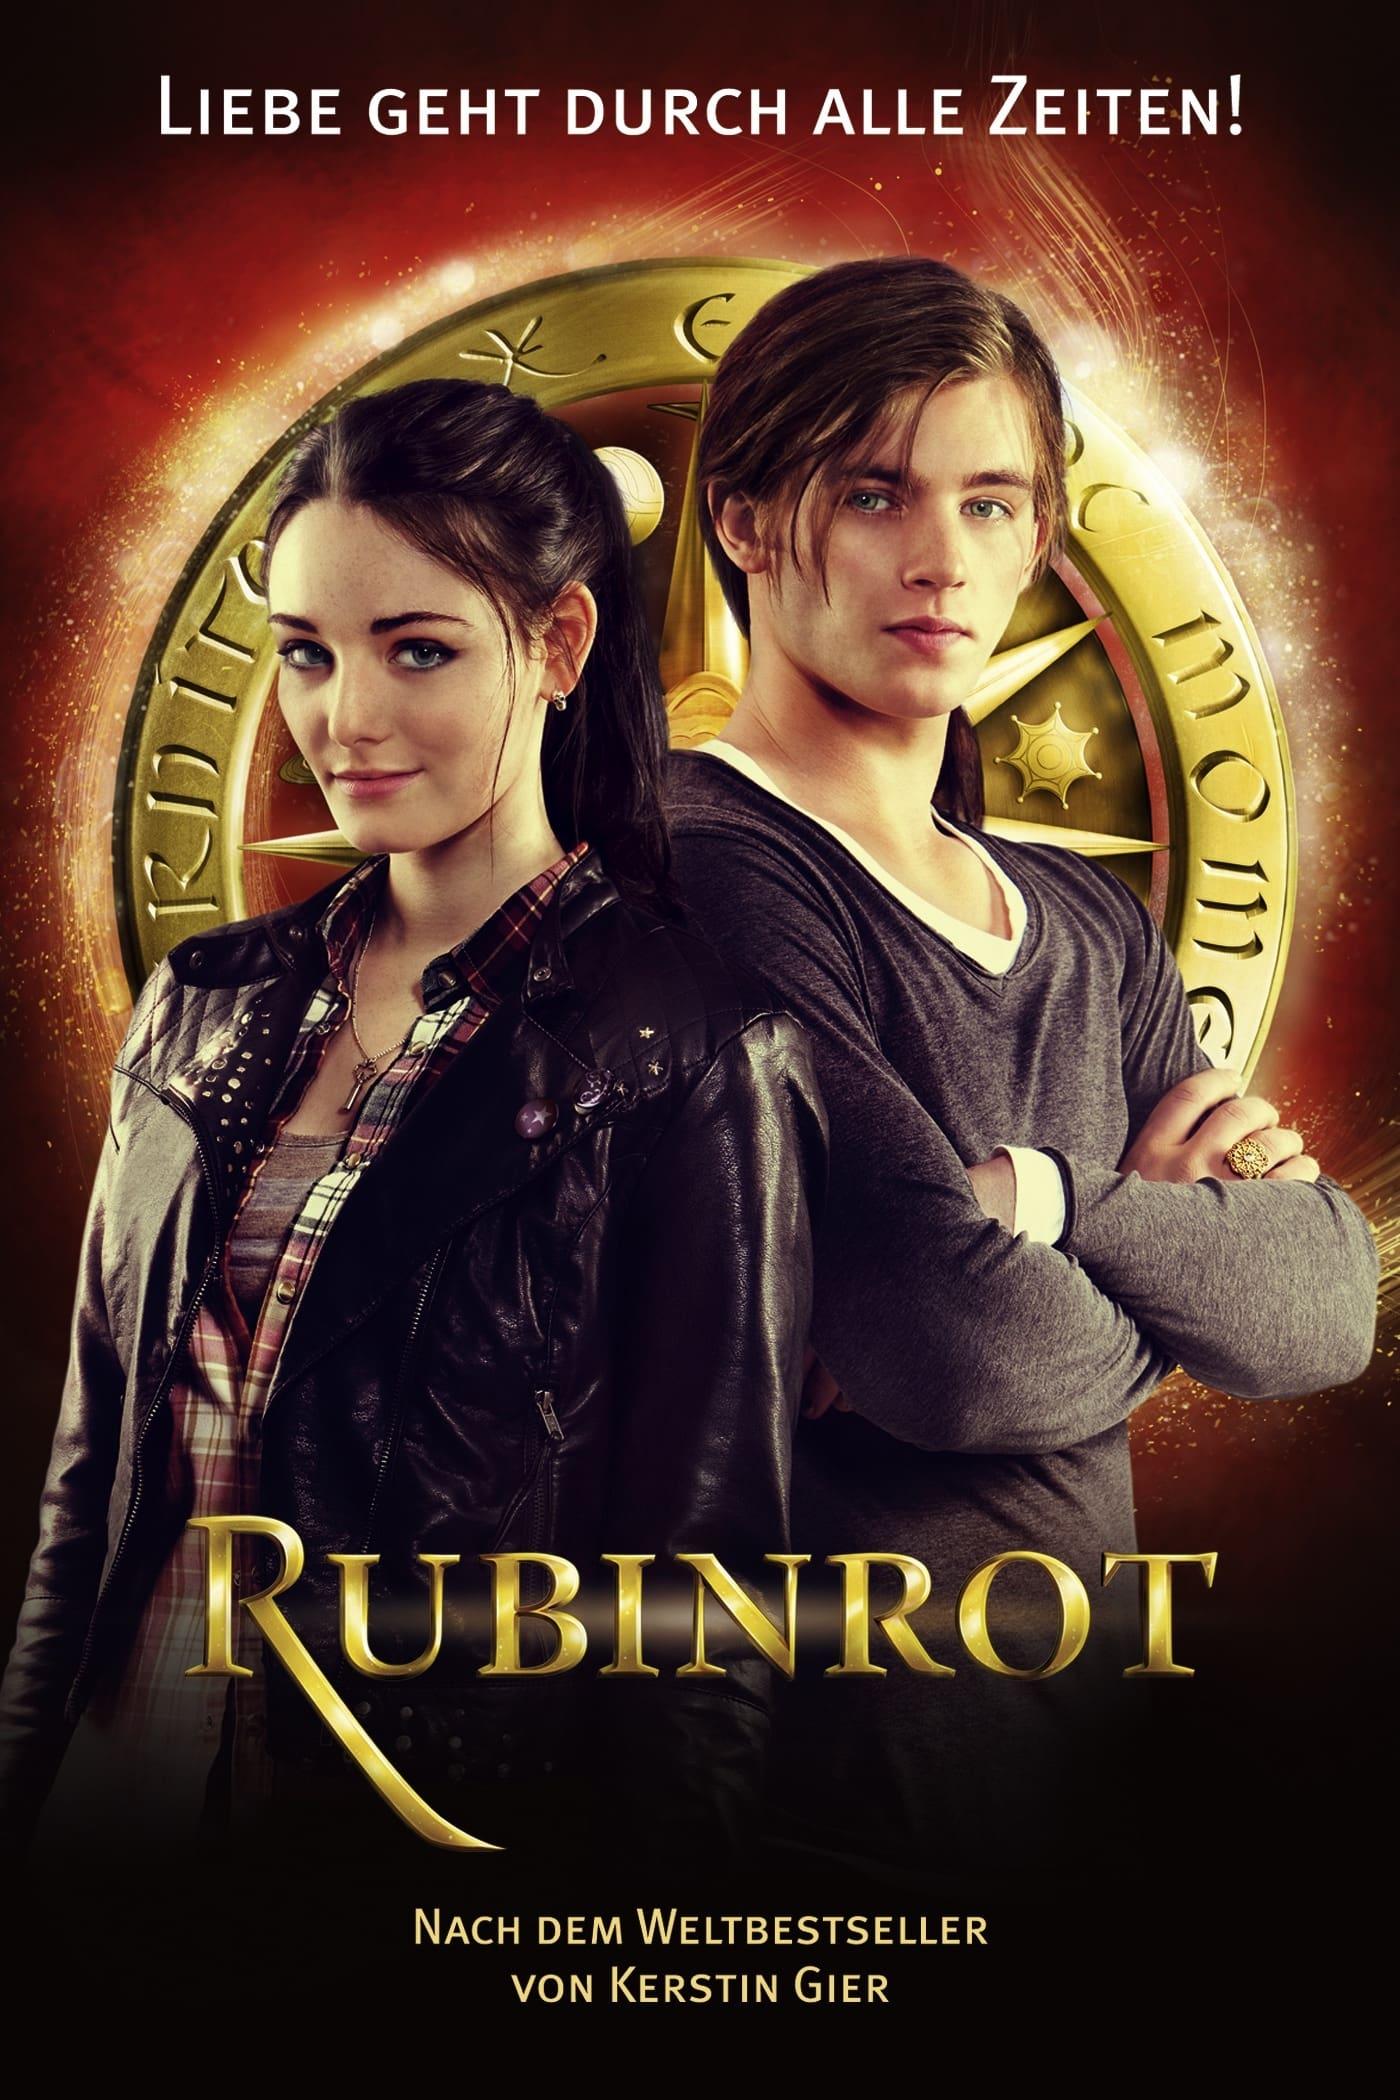 Rubinrot poster